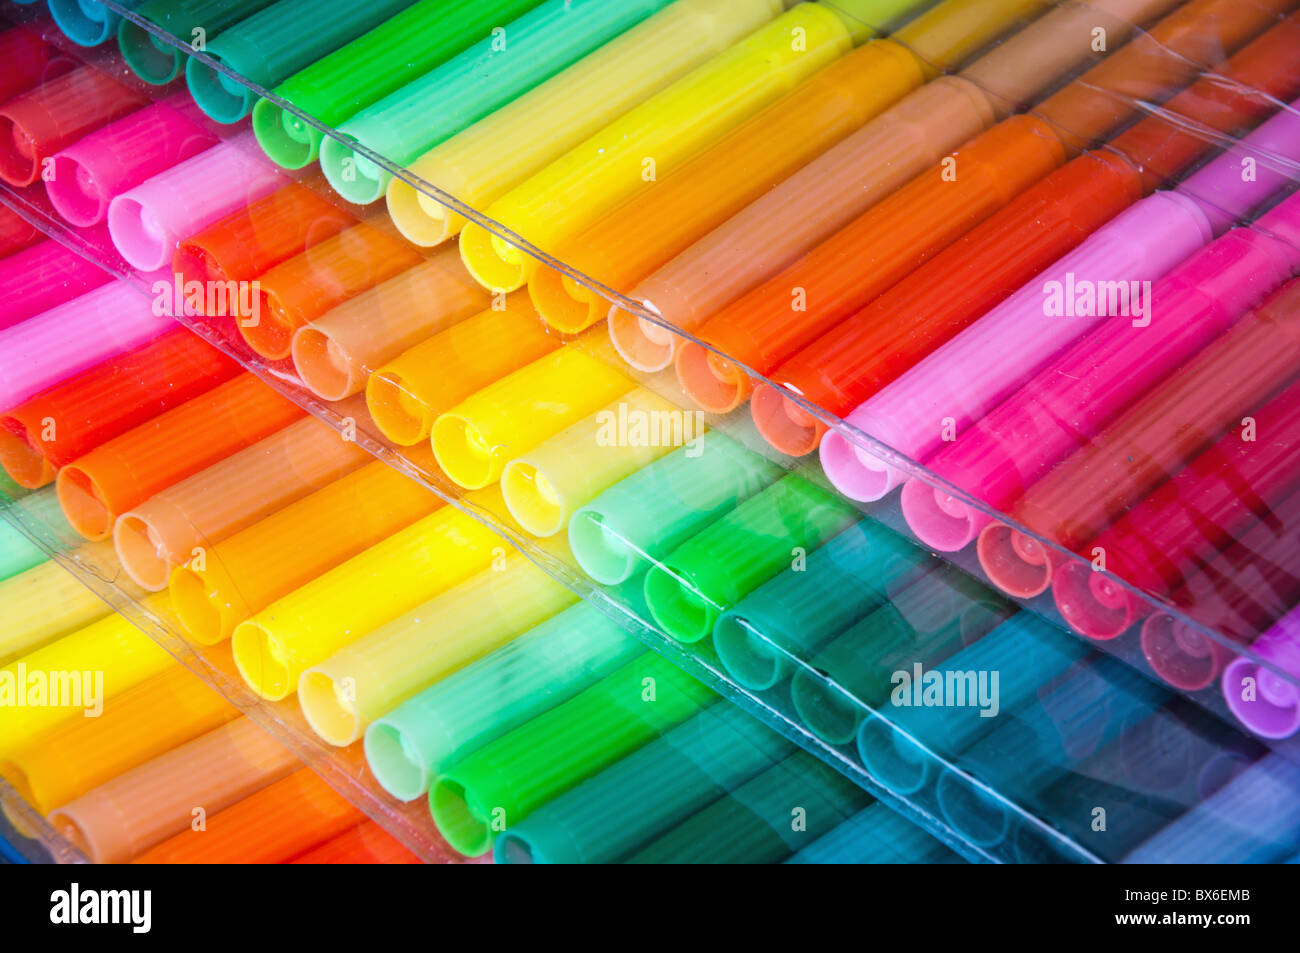 Panels of colour felt-tip pens laid by a fan Stock Photo